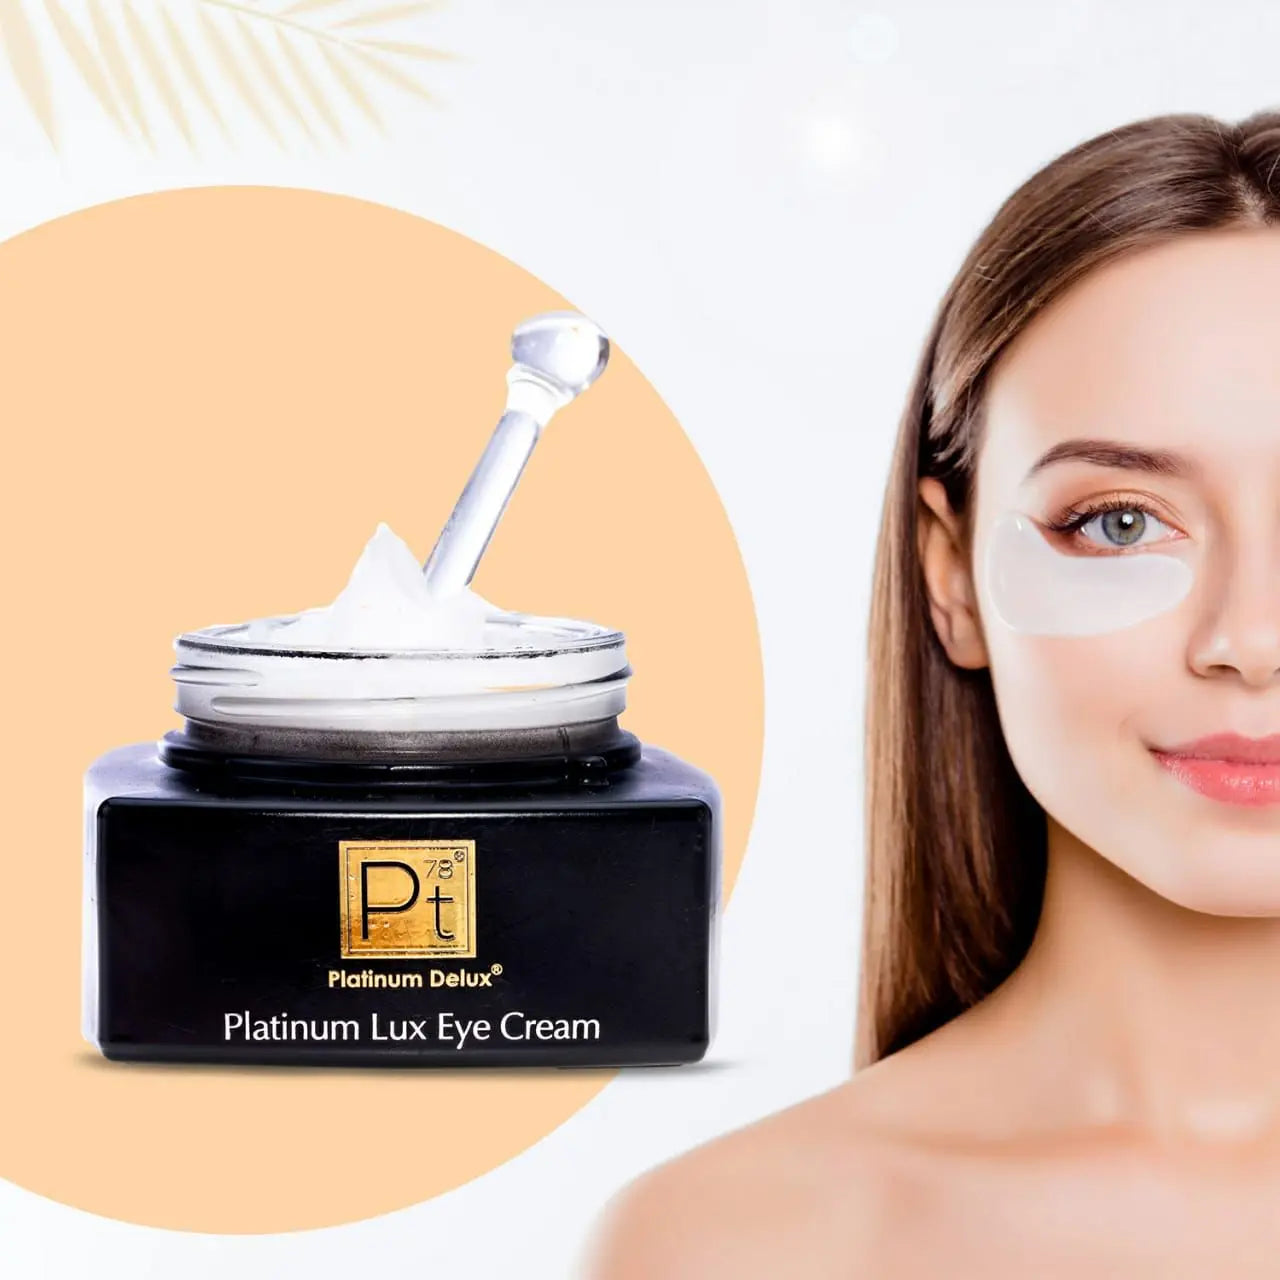 Beauty Chemists Explain What a epidermis-care ‘lively’ Truly Is Platinum Delux ®